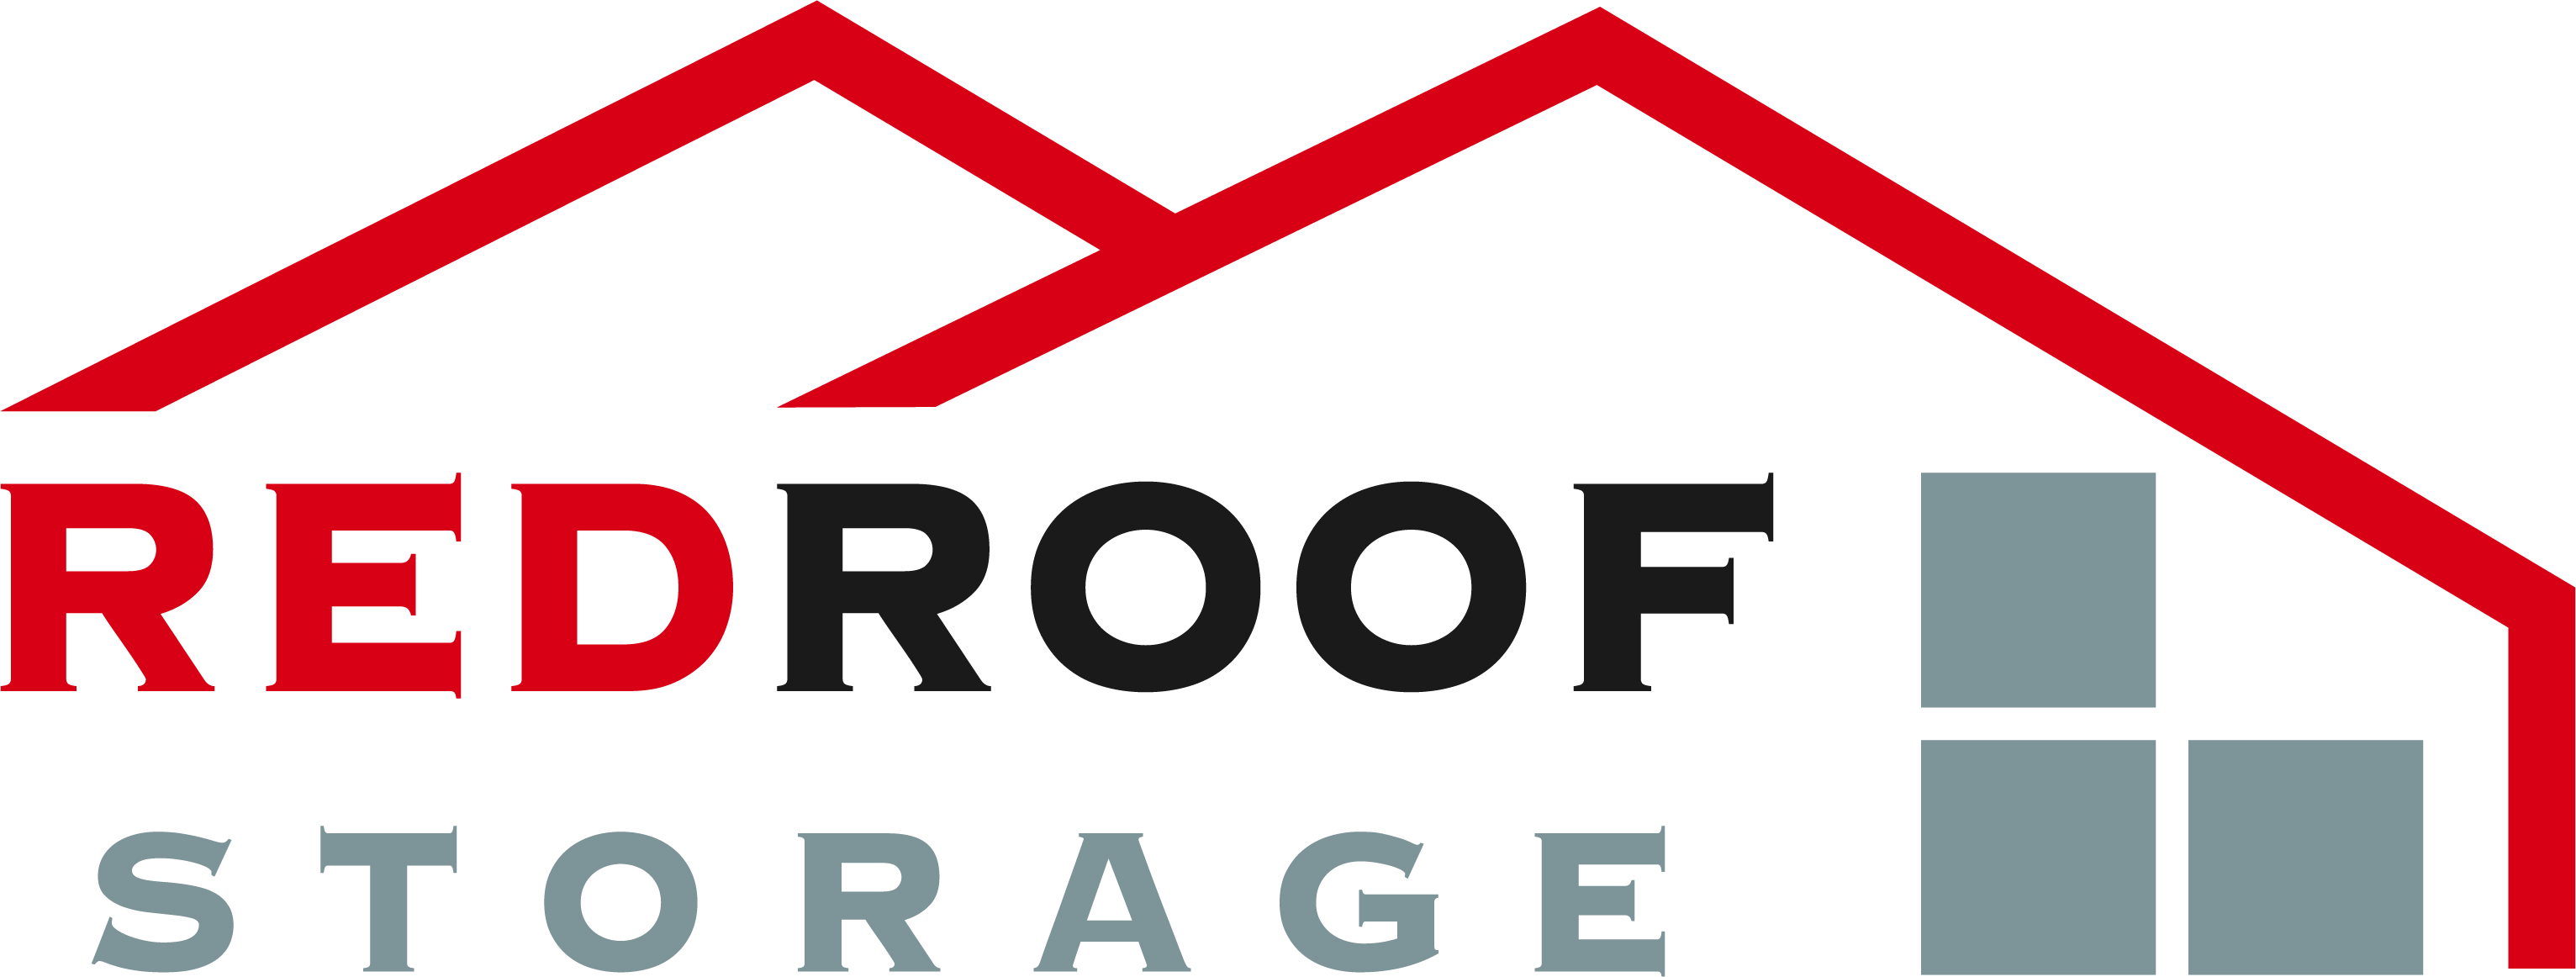 Red Roof Storage LLC